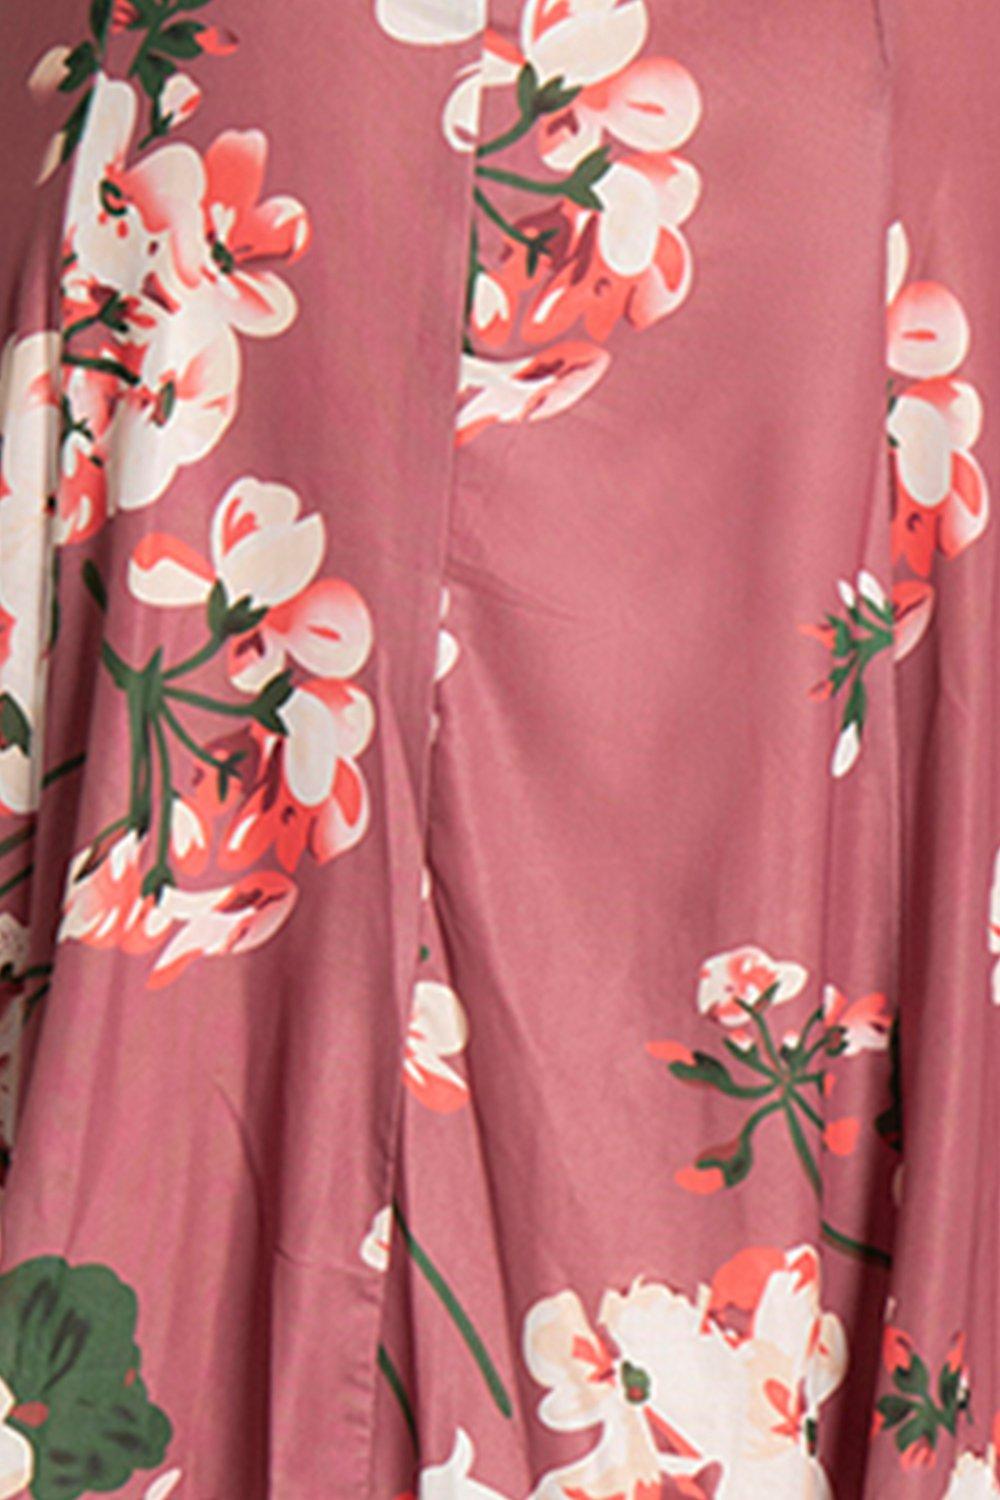 Jolie Moi - Bellona Fit & Flare Mesh Dress - Light Pink - Size 12